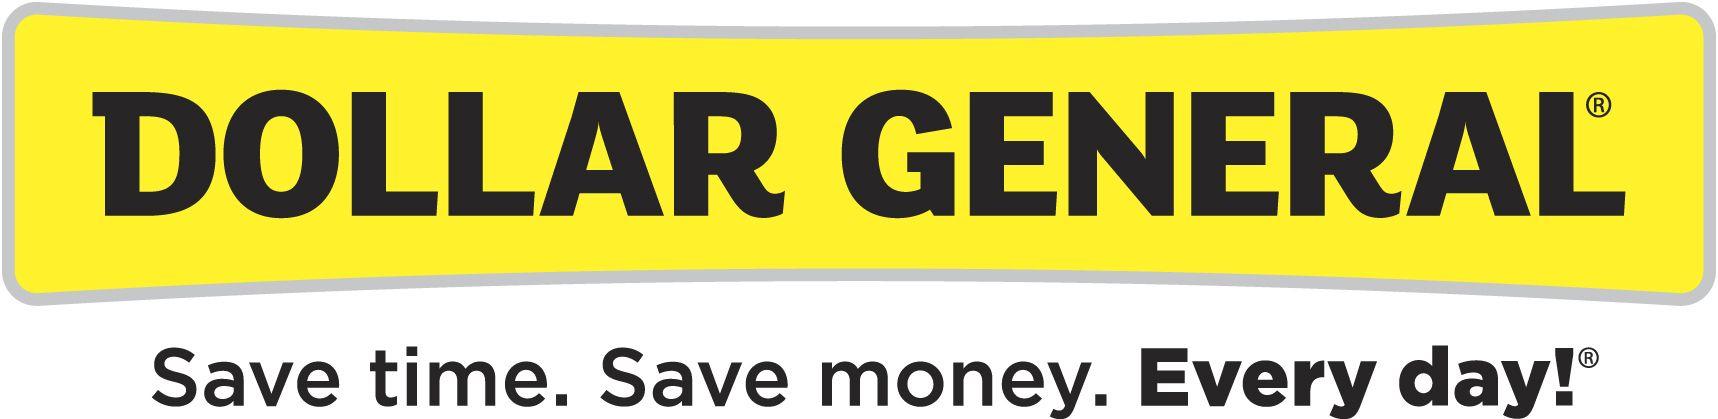 Dollar General DG Logo - Renegade Buggies App Launches, Makes Smart Spending Fun for Families ...